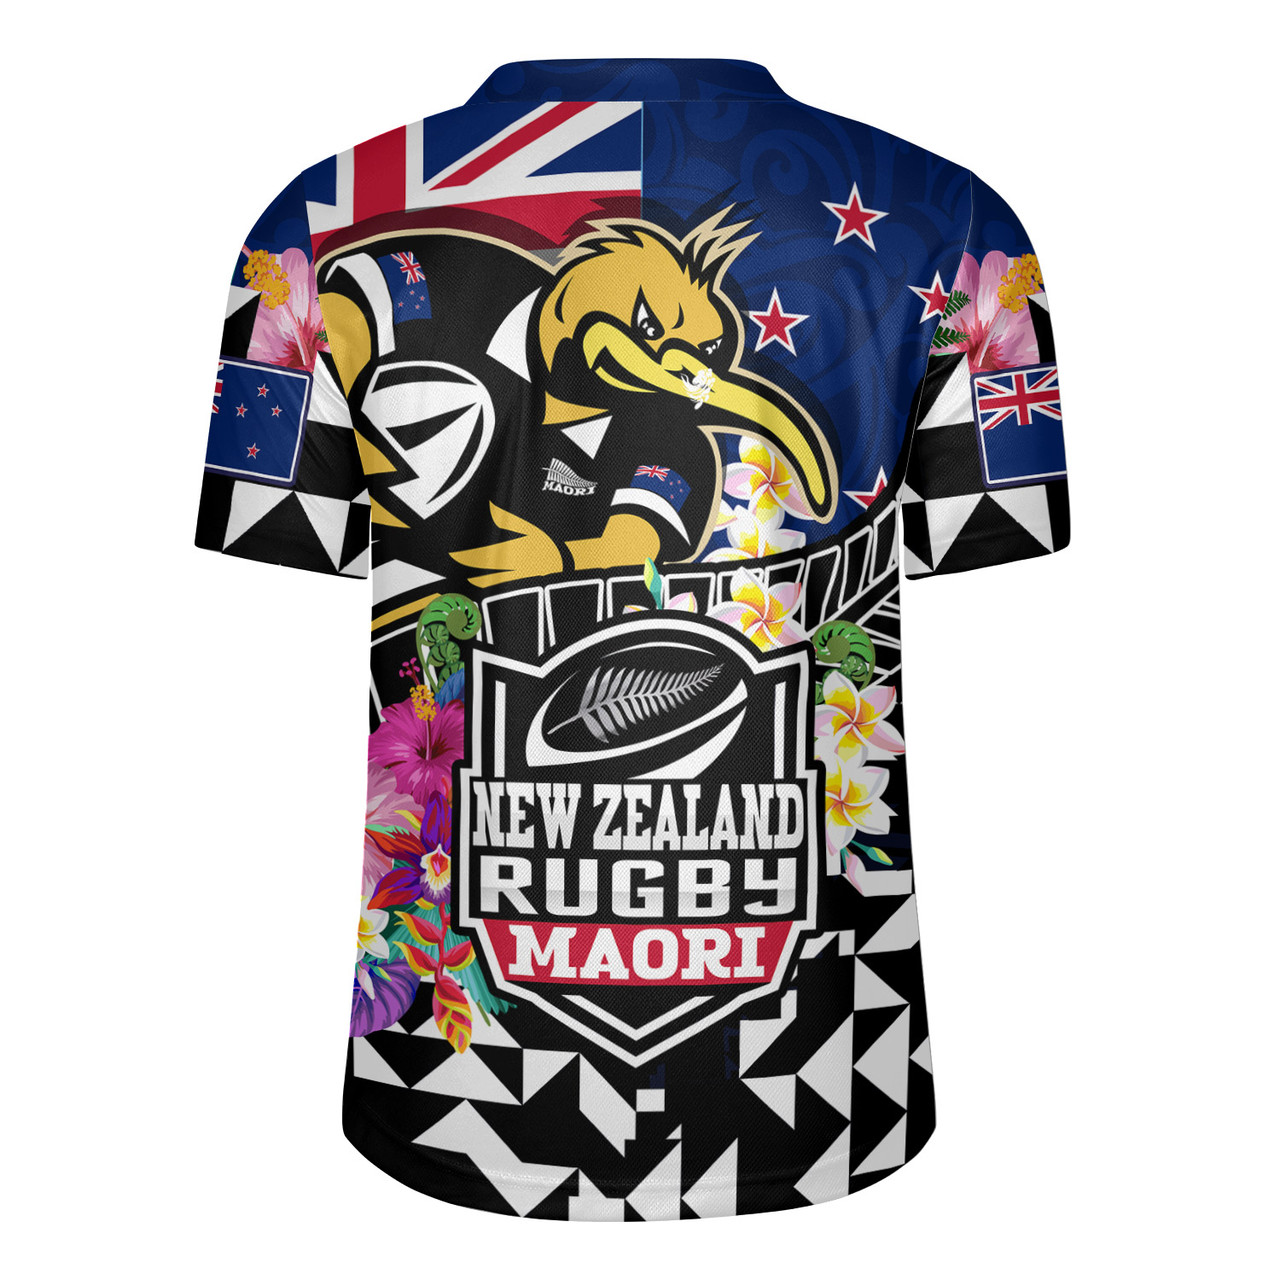 New Zealand Rugby Jersey Custom Maori Kiwis Rugby Silver Fern Black Hexagon Tropical Jersey